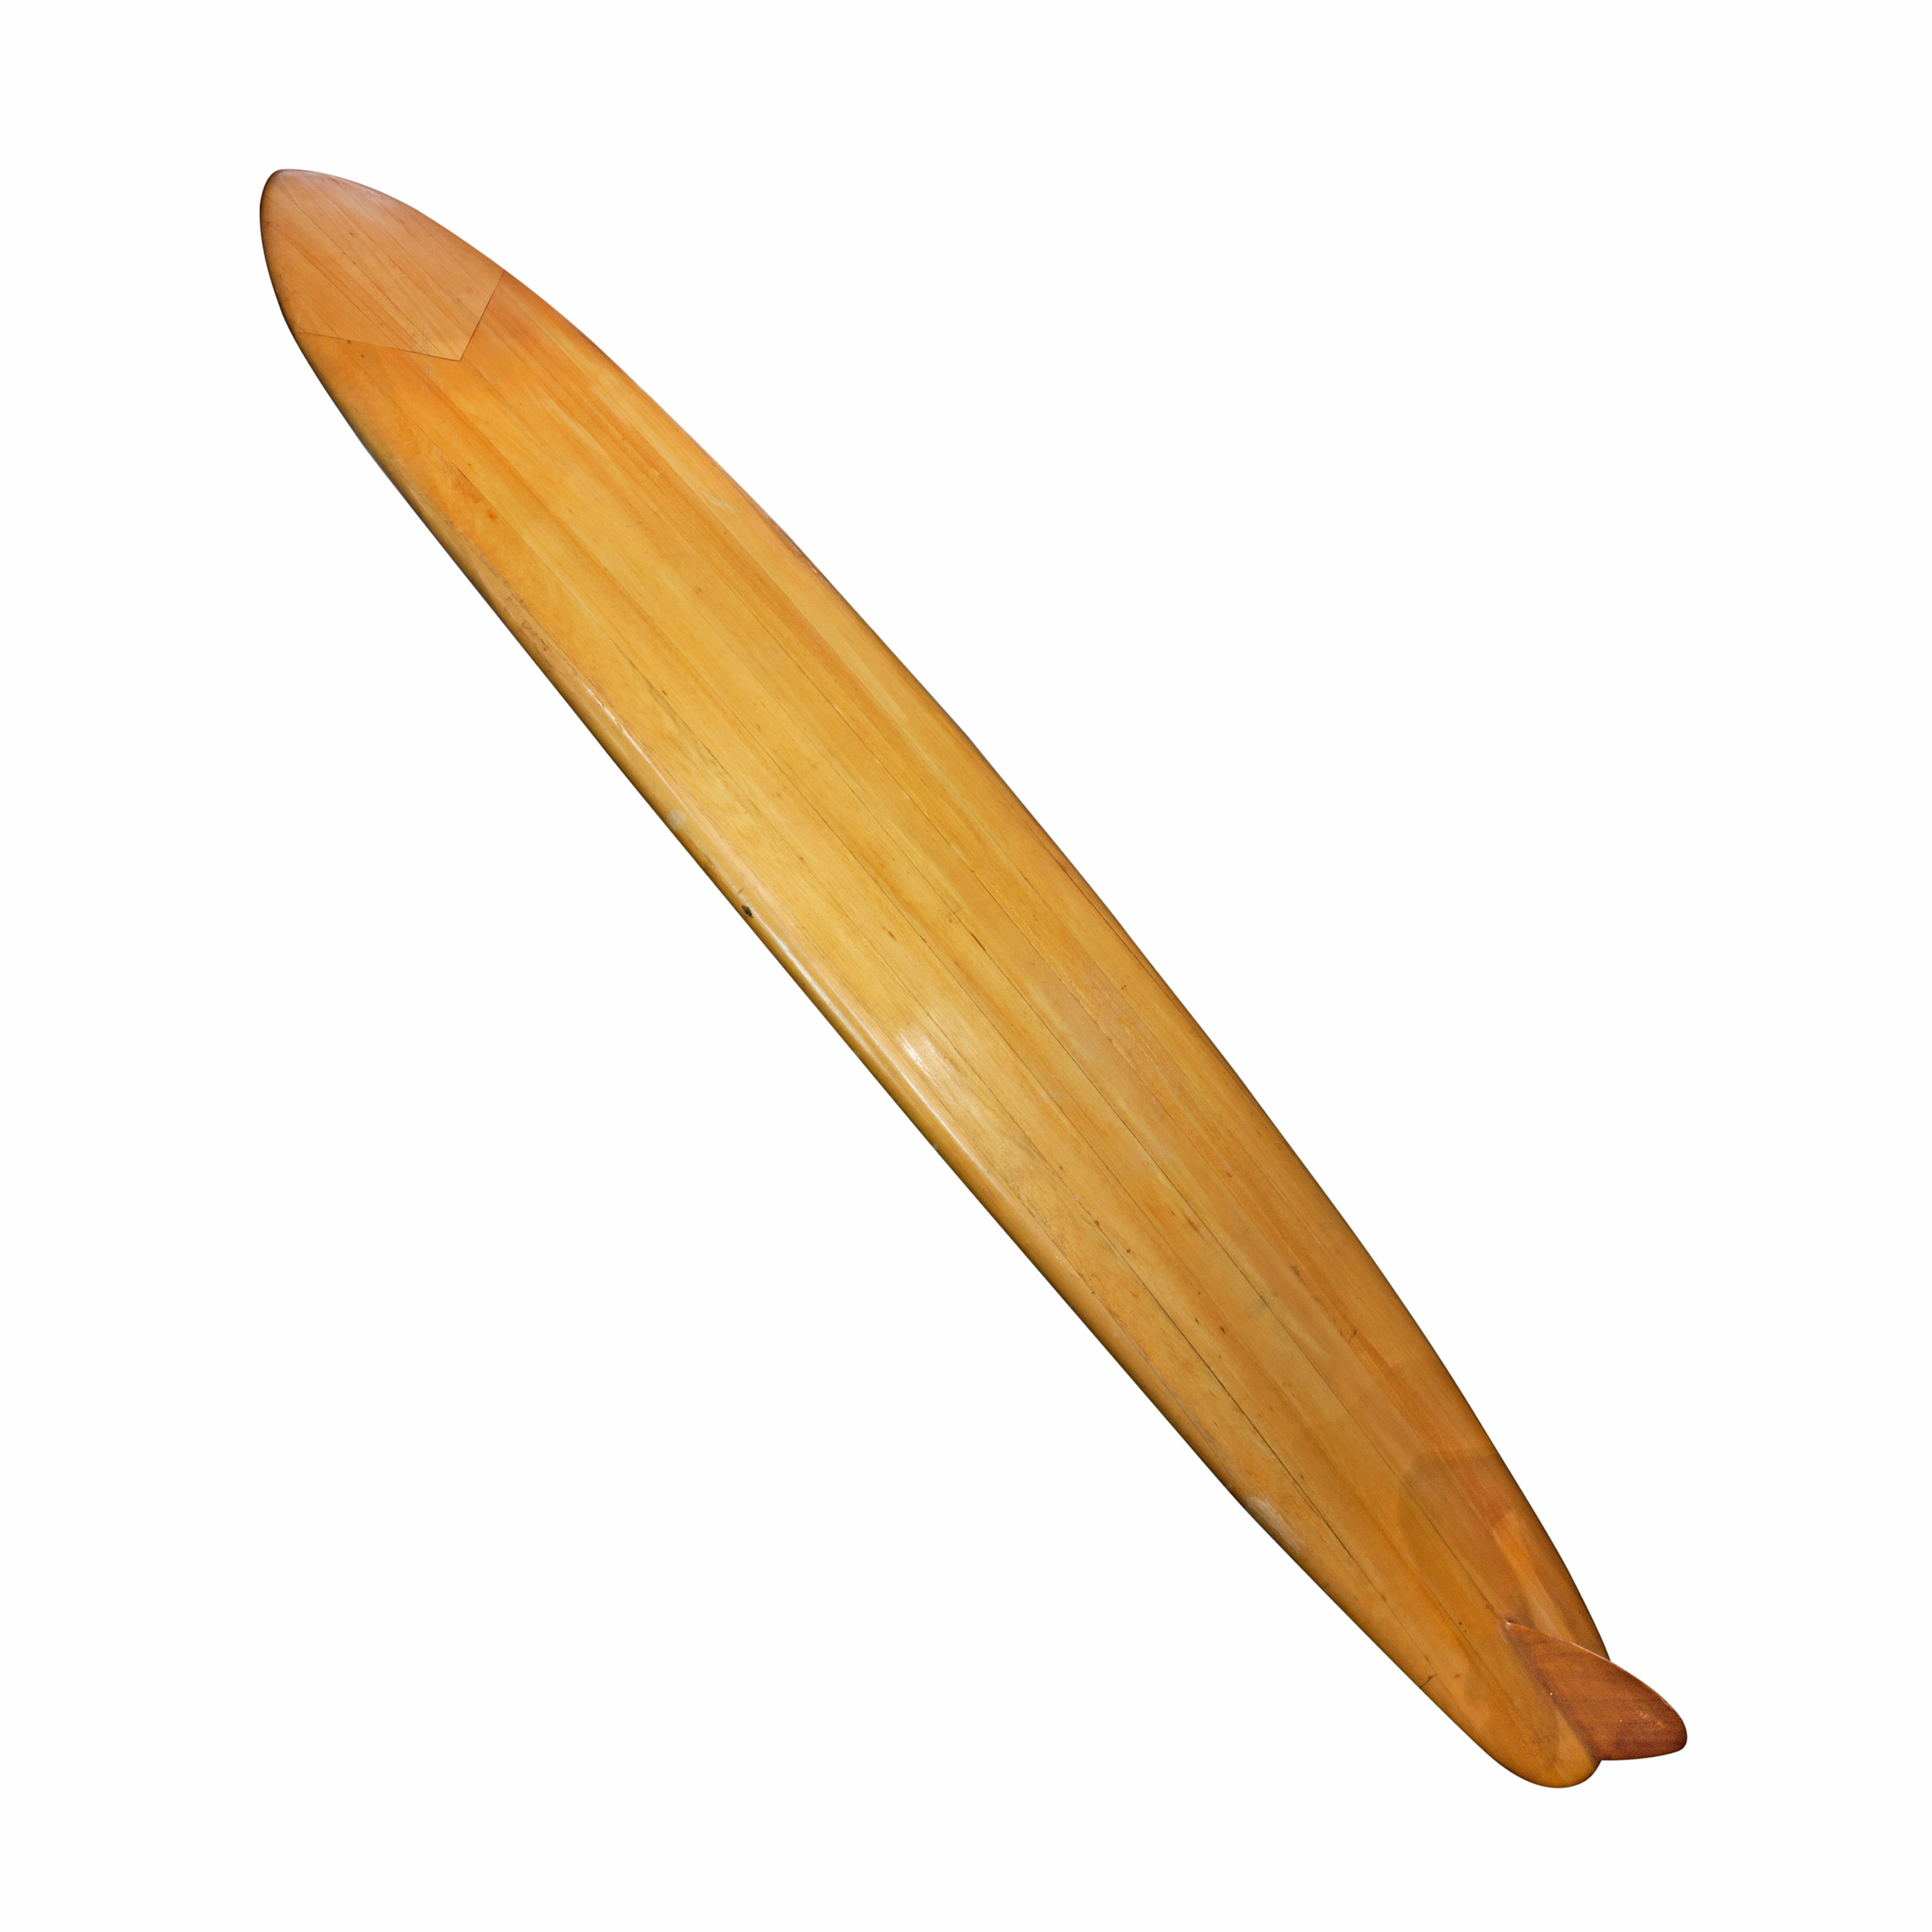 AN EARLY HOBIE BALSA WOOD SURFBOARD